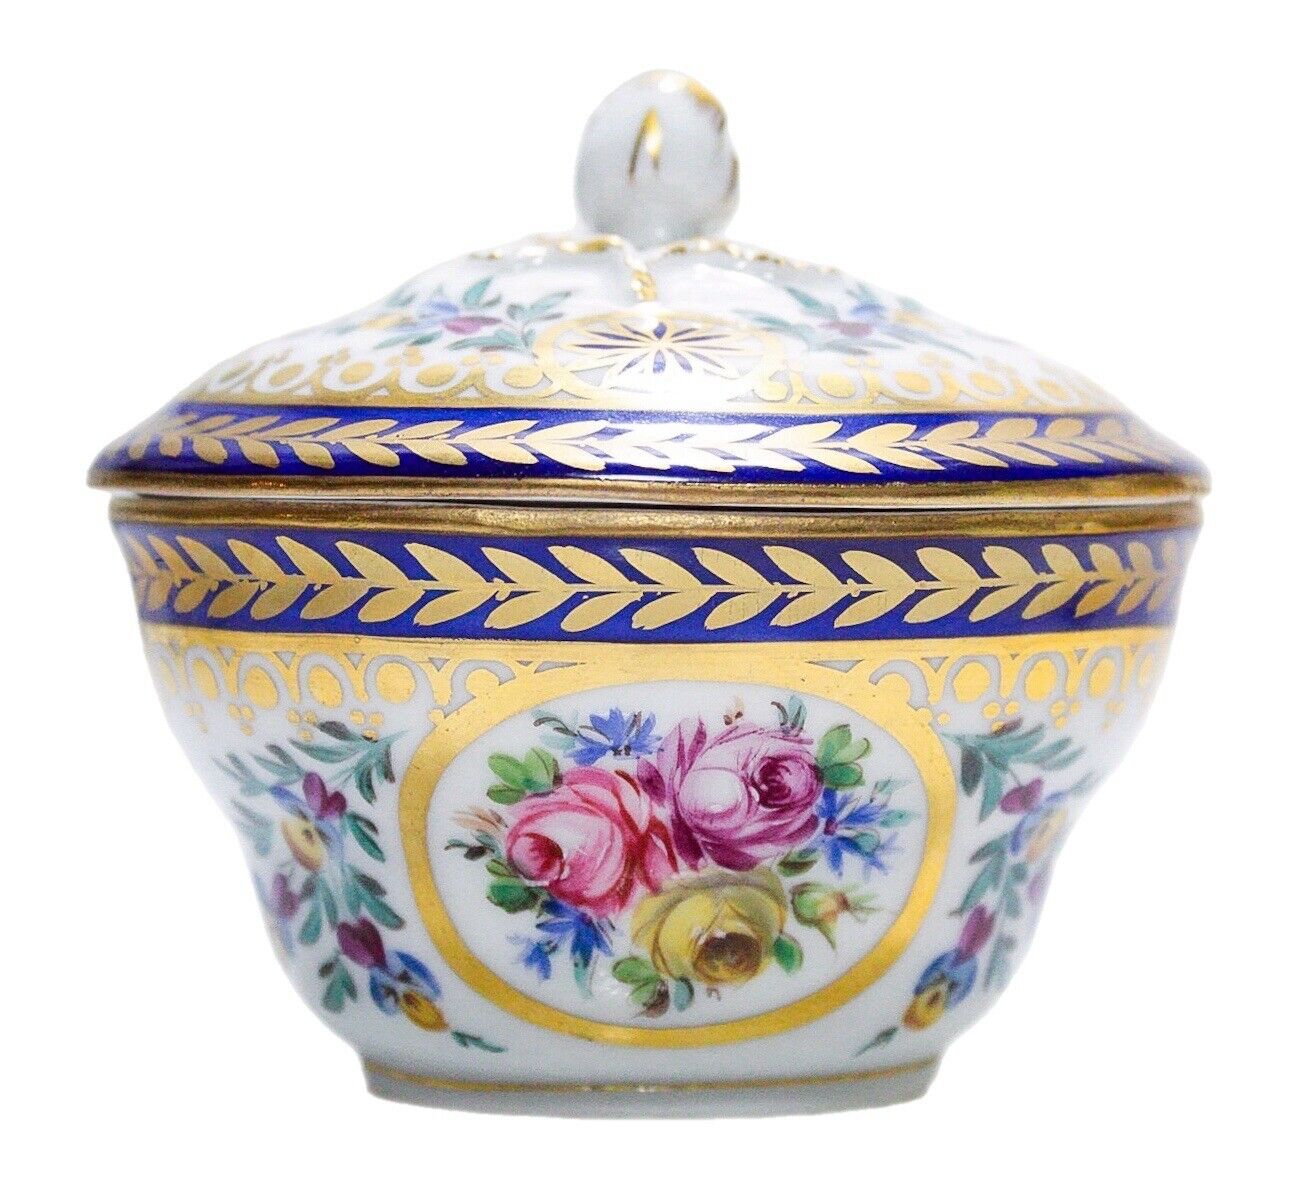 Antique DRESDEN Germany Hand Painted Floral Motif Porcelain Covered Sugar Bowl